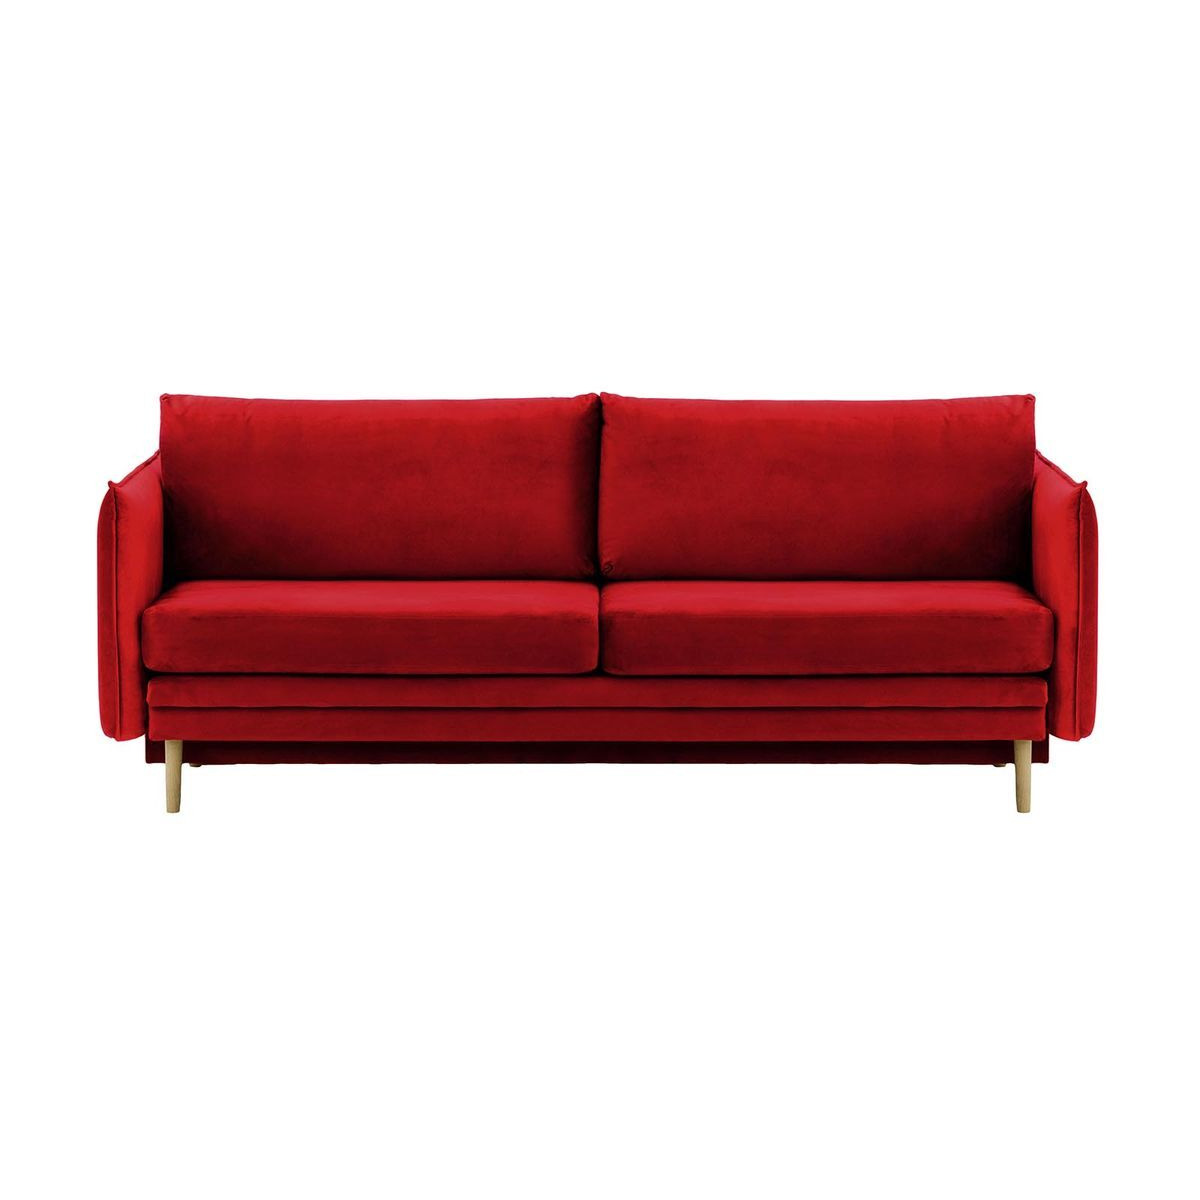 Nimbus Sofa Bed with Storage, pink, Leg colour: dark oak - image 1